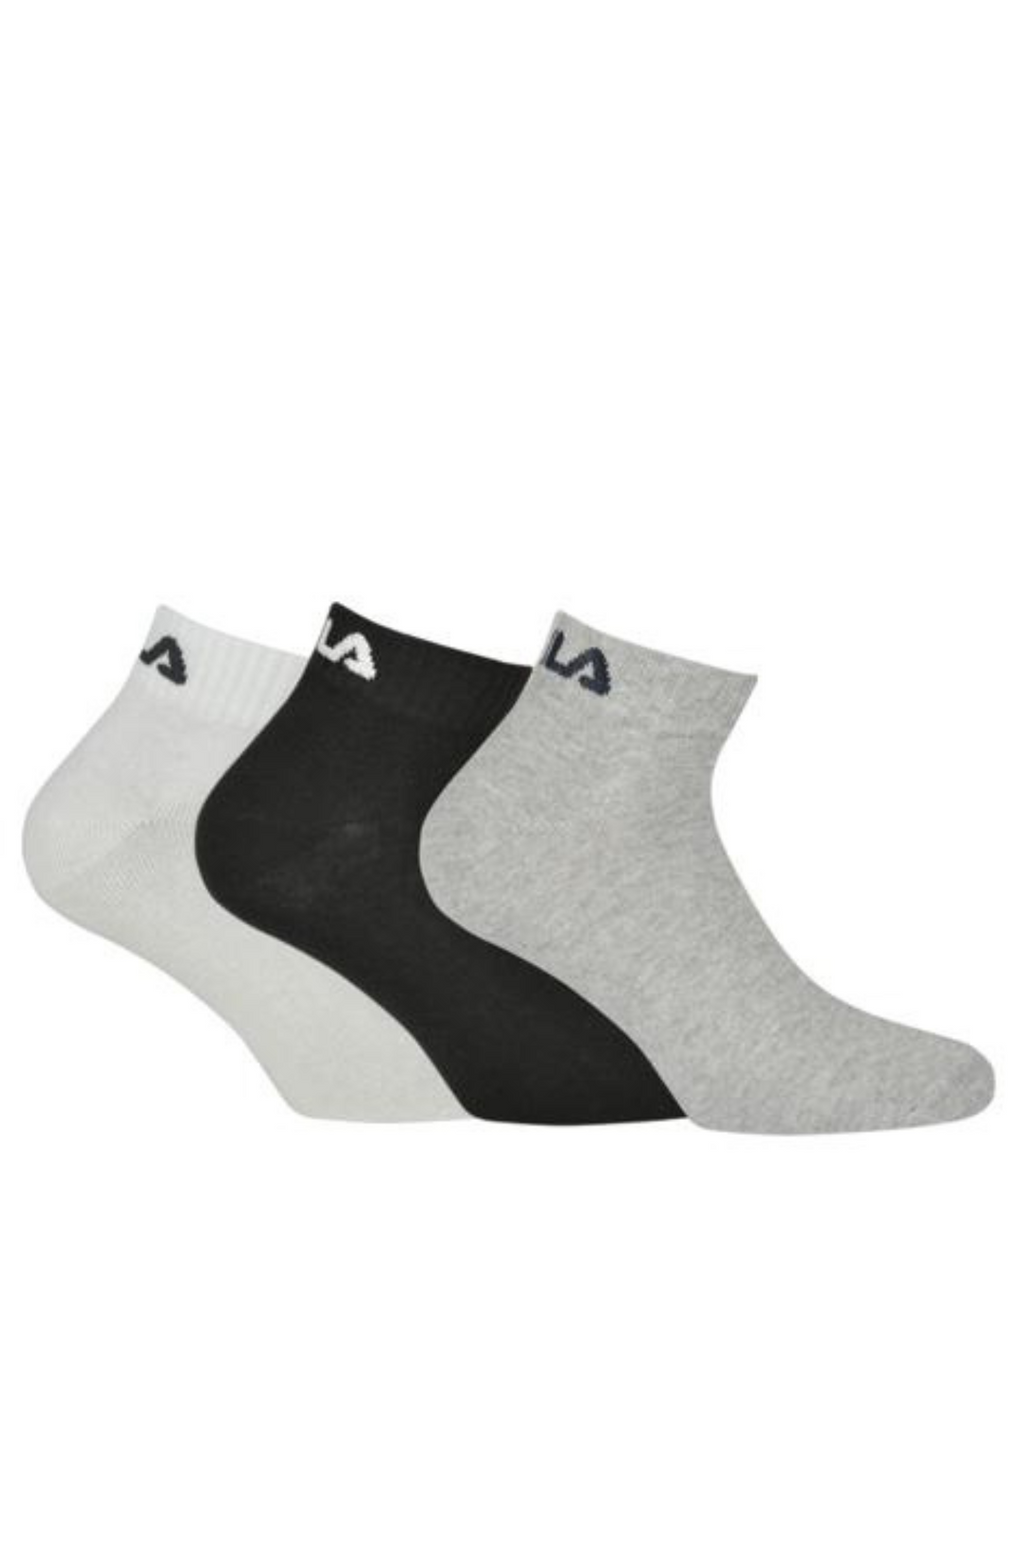 Fila Quater Socks 6 Pairs Pack Classic